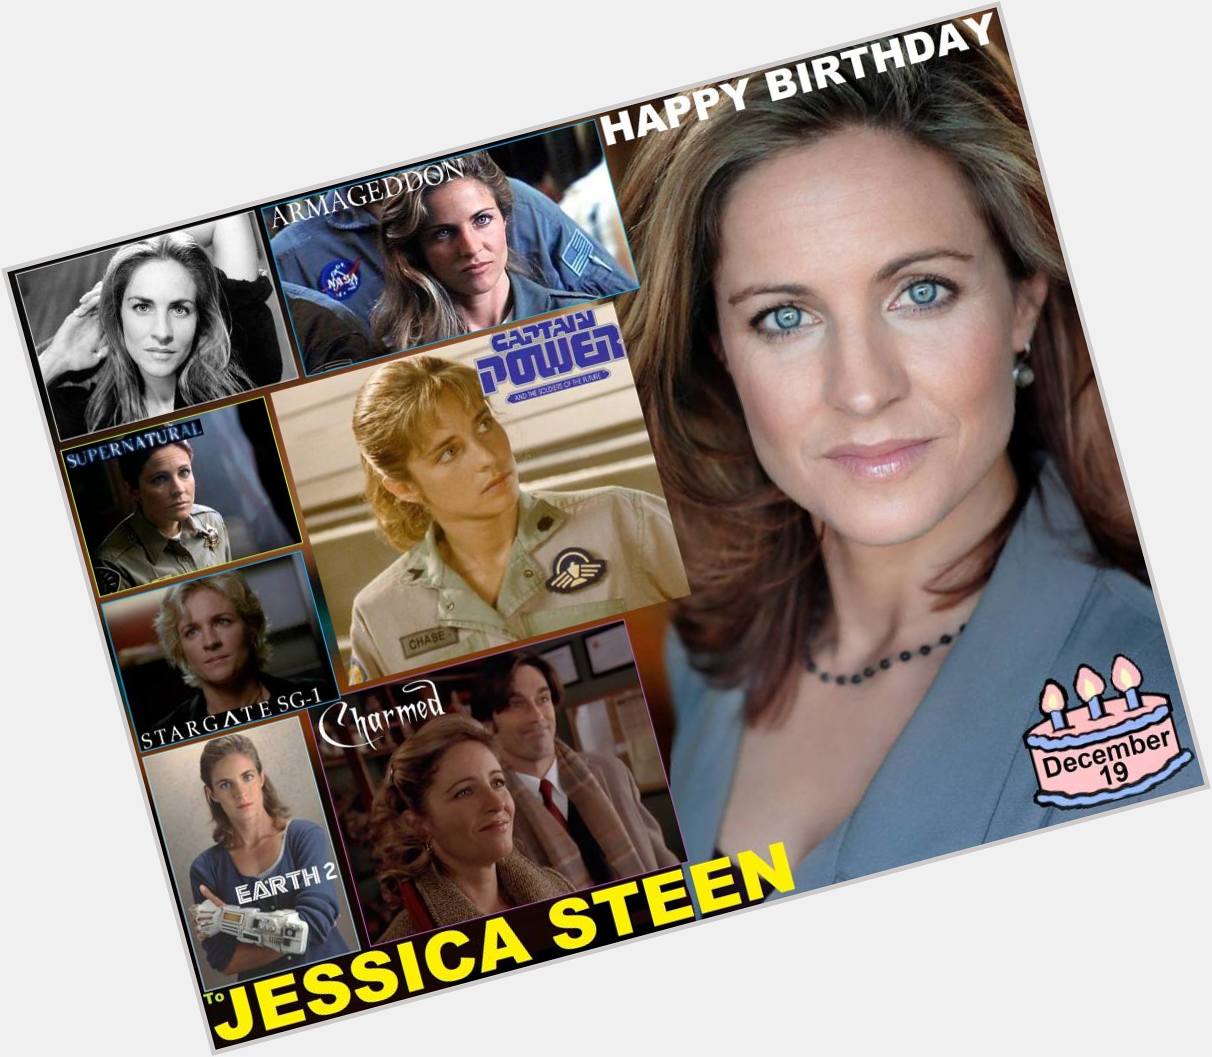 Happy birthday to Jessica Steen, born December 19, 1965.  